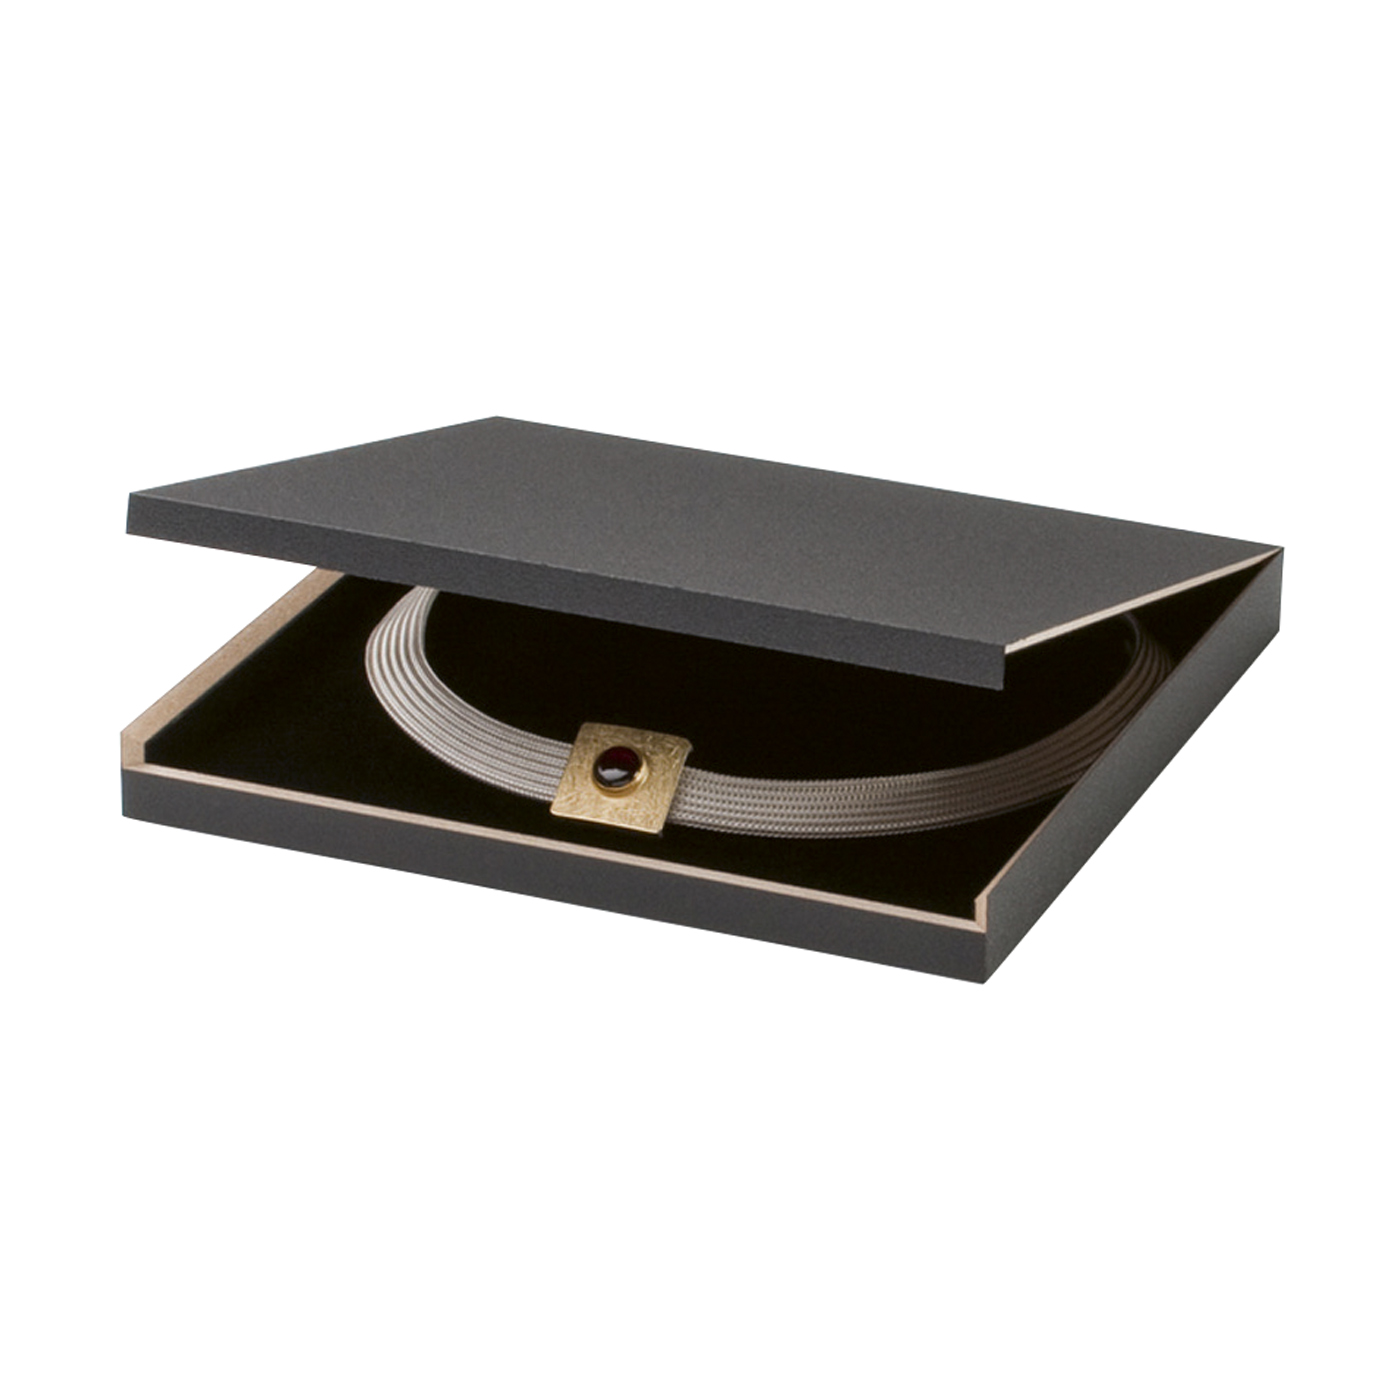 Jewellery Packaging "Blackbox", 170 x 170 x 18 mm - 1 piece